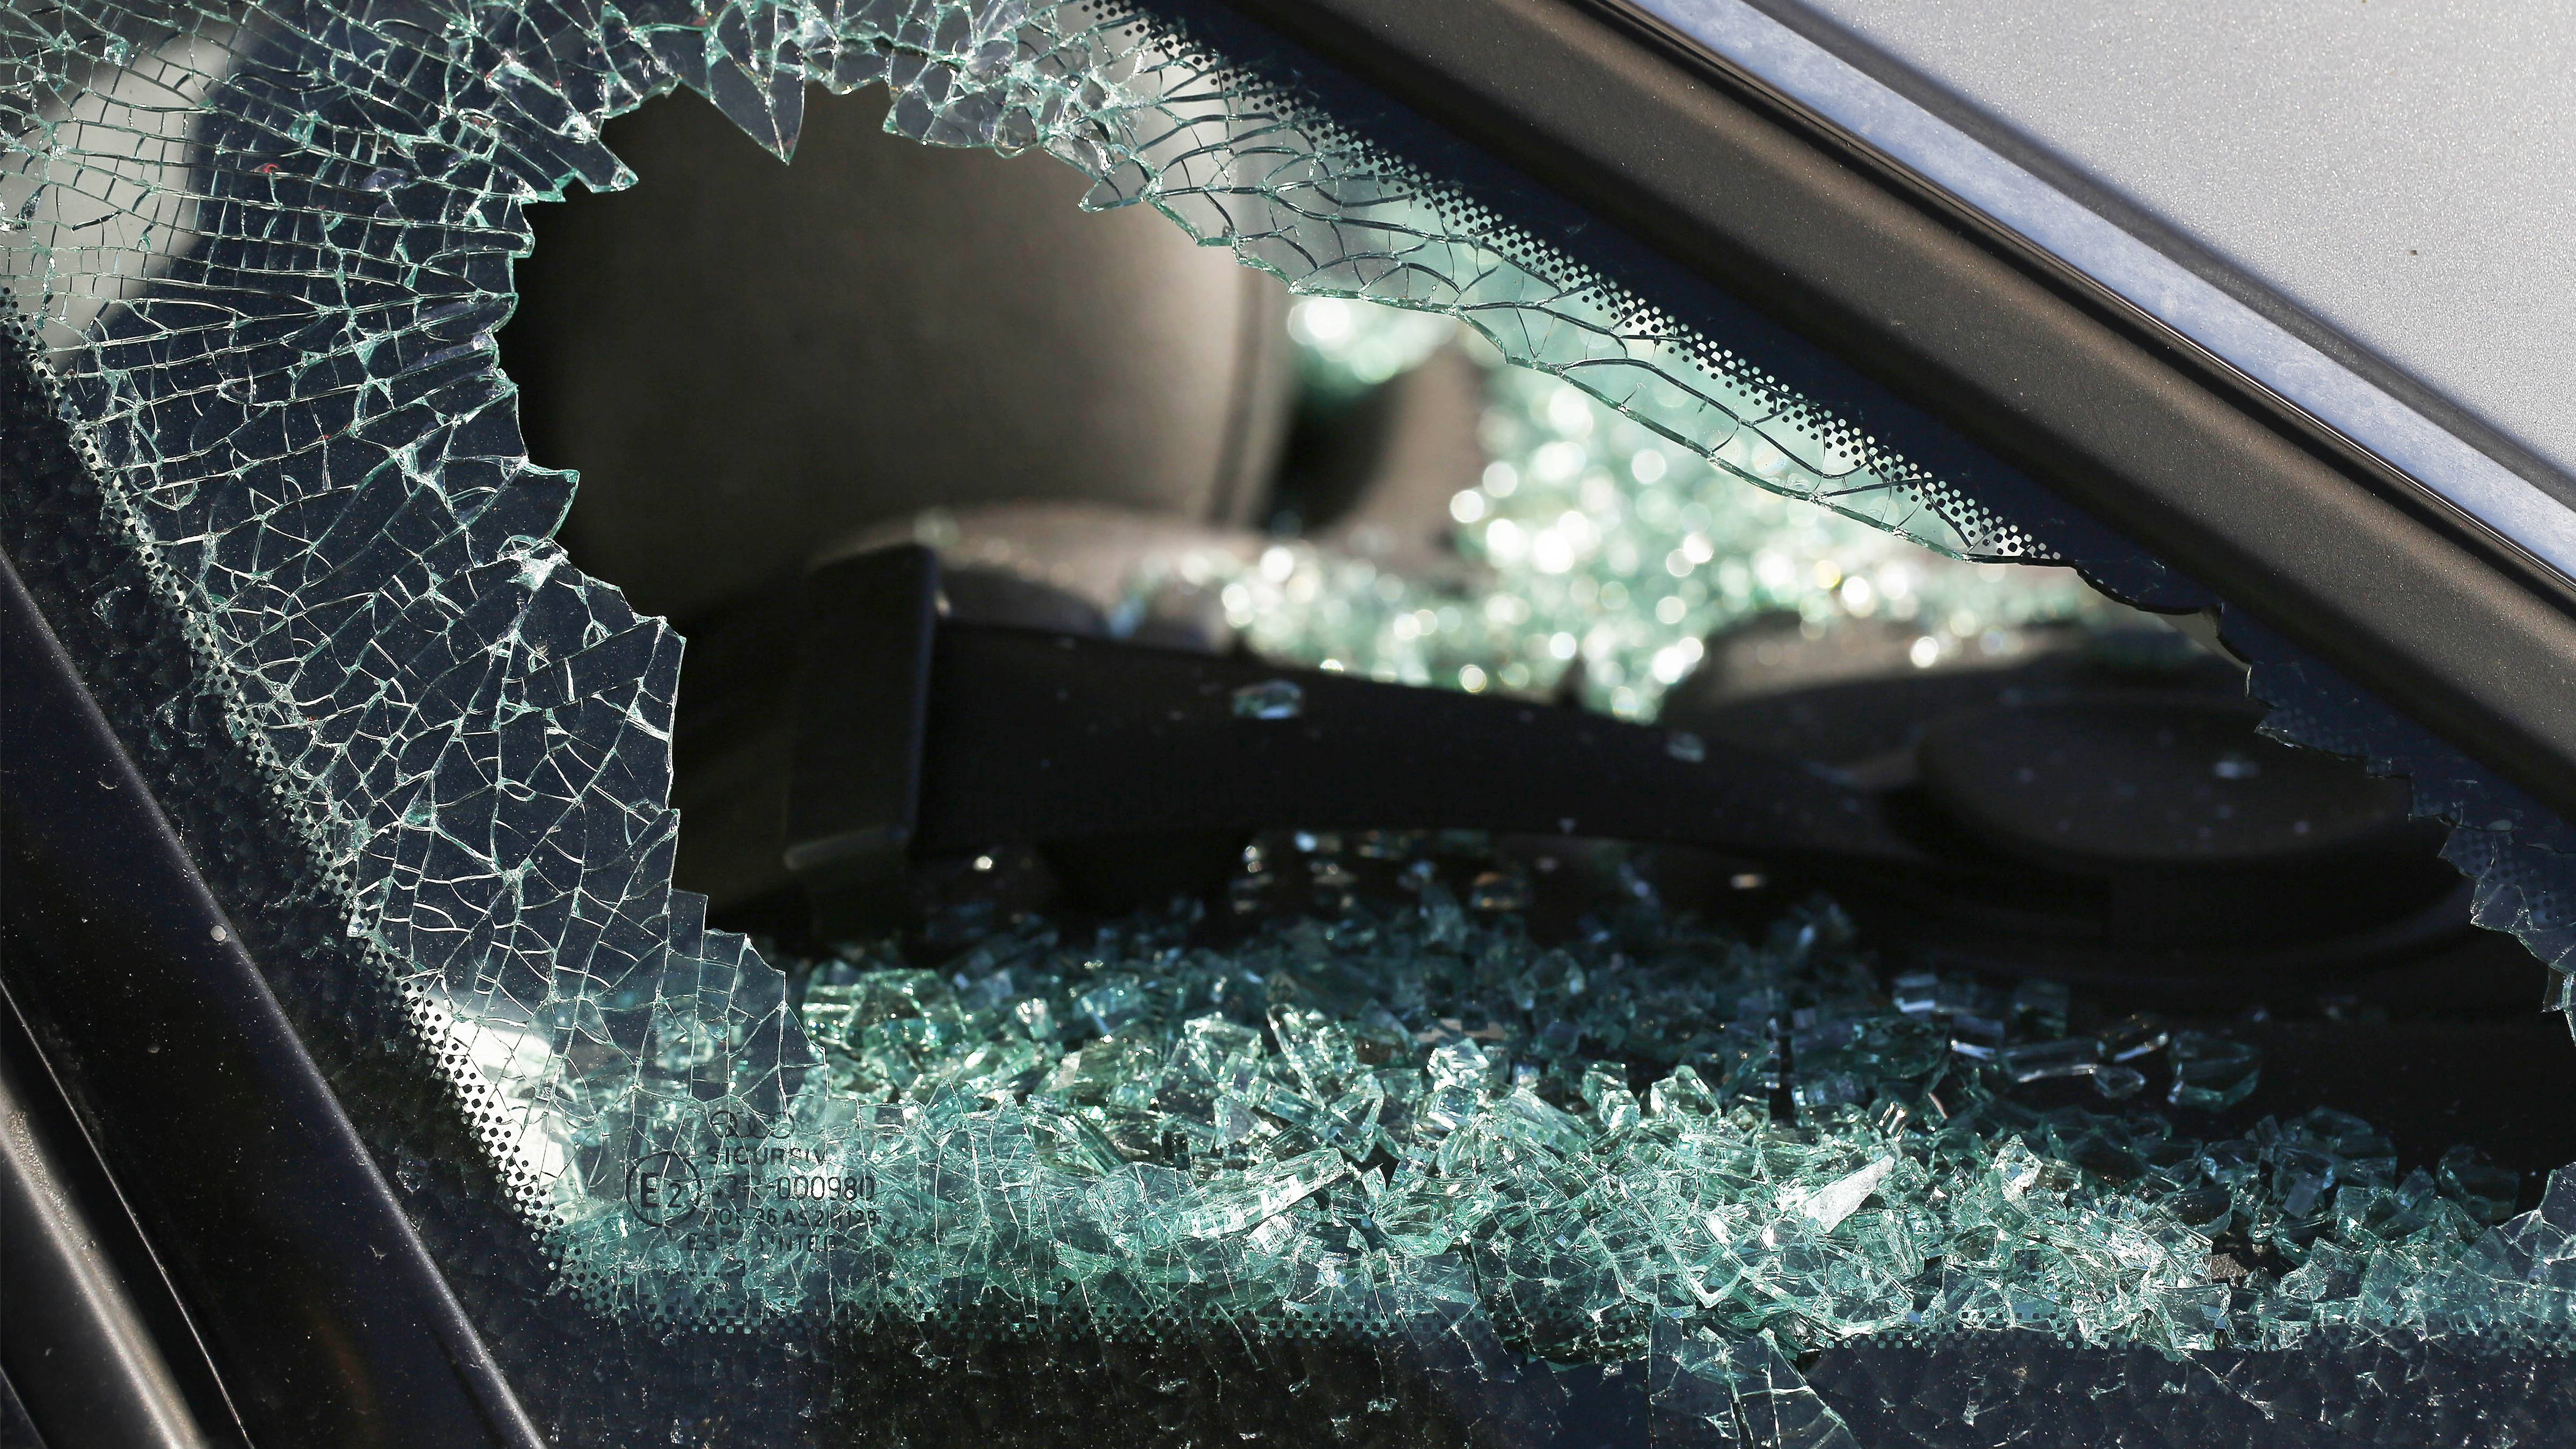 Drug kingpin Alpo Martinez threw heroin baggies out truck's window